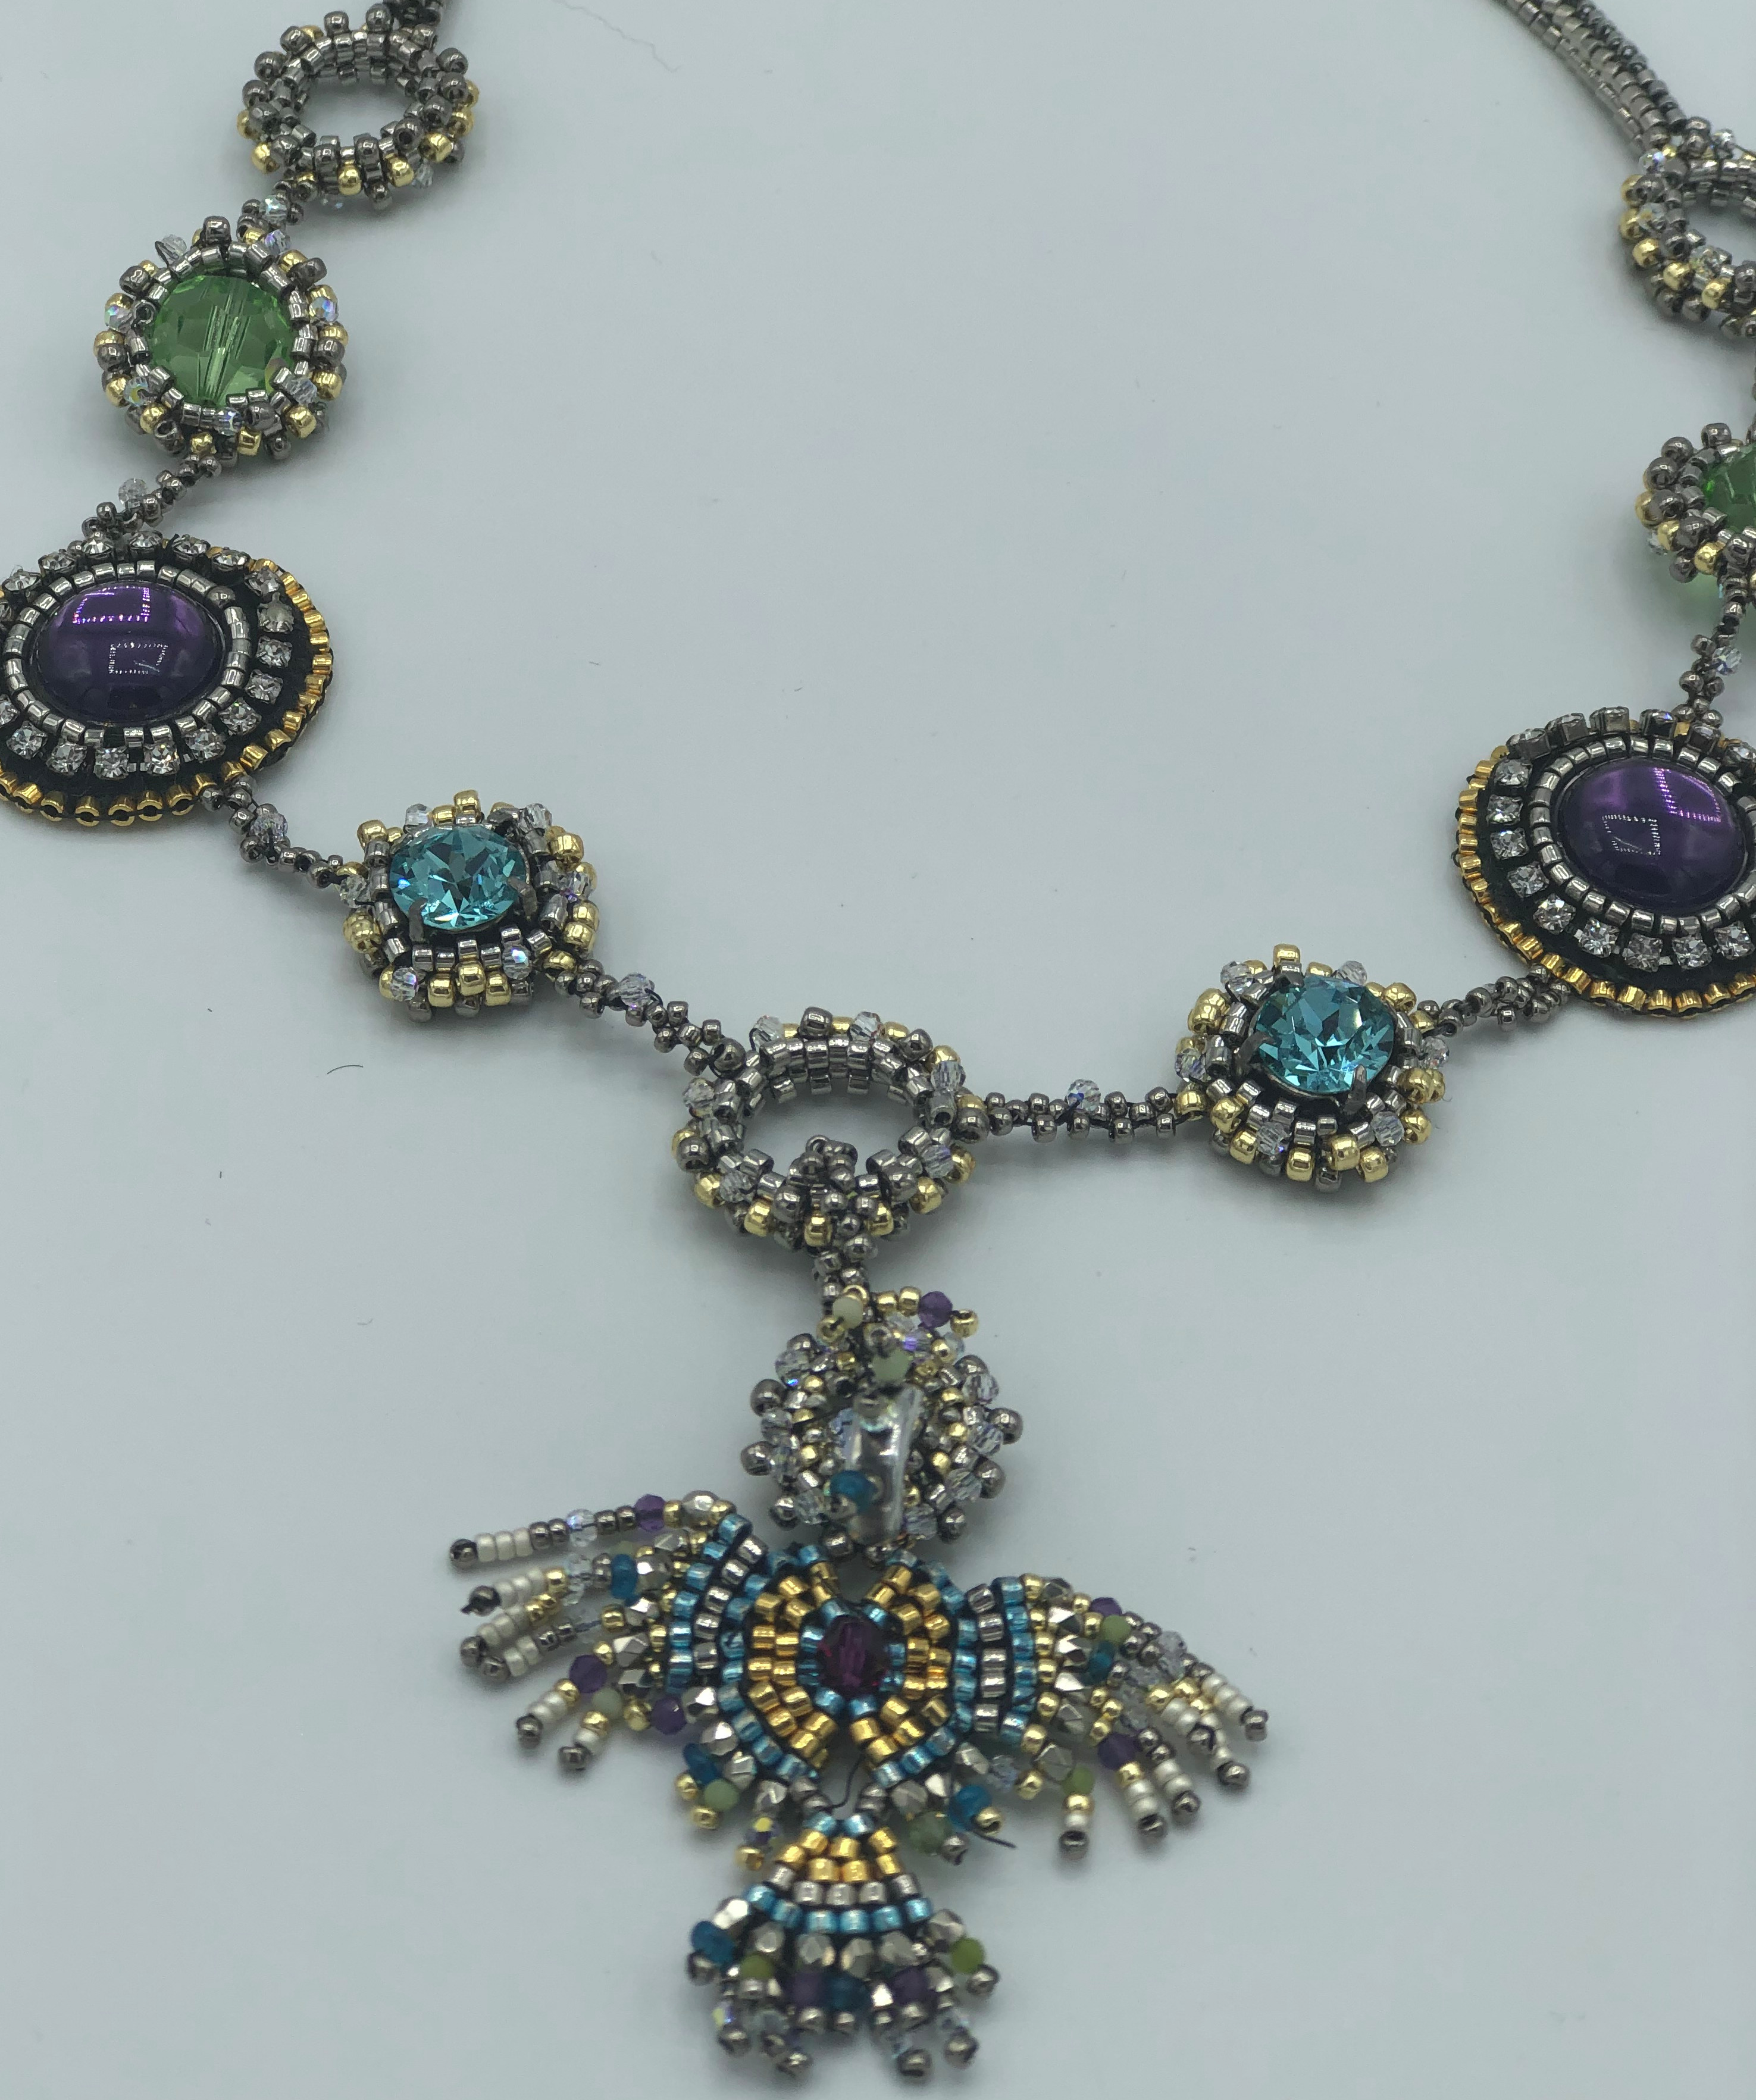 Jewelry Craft & Design Expo: Create Handmade Jewelry in Tucson with ...